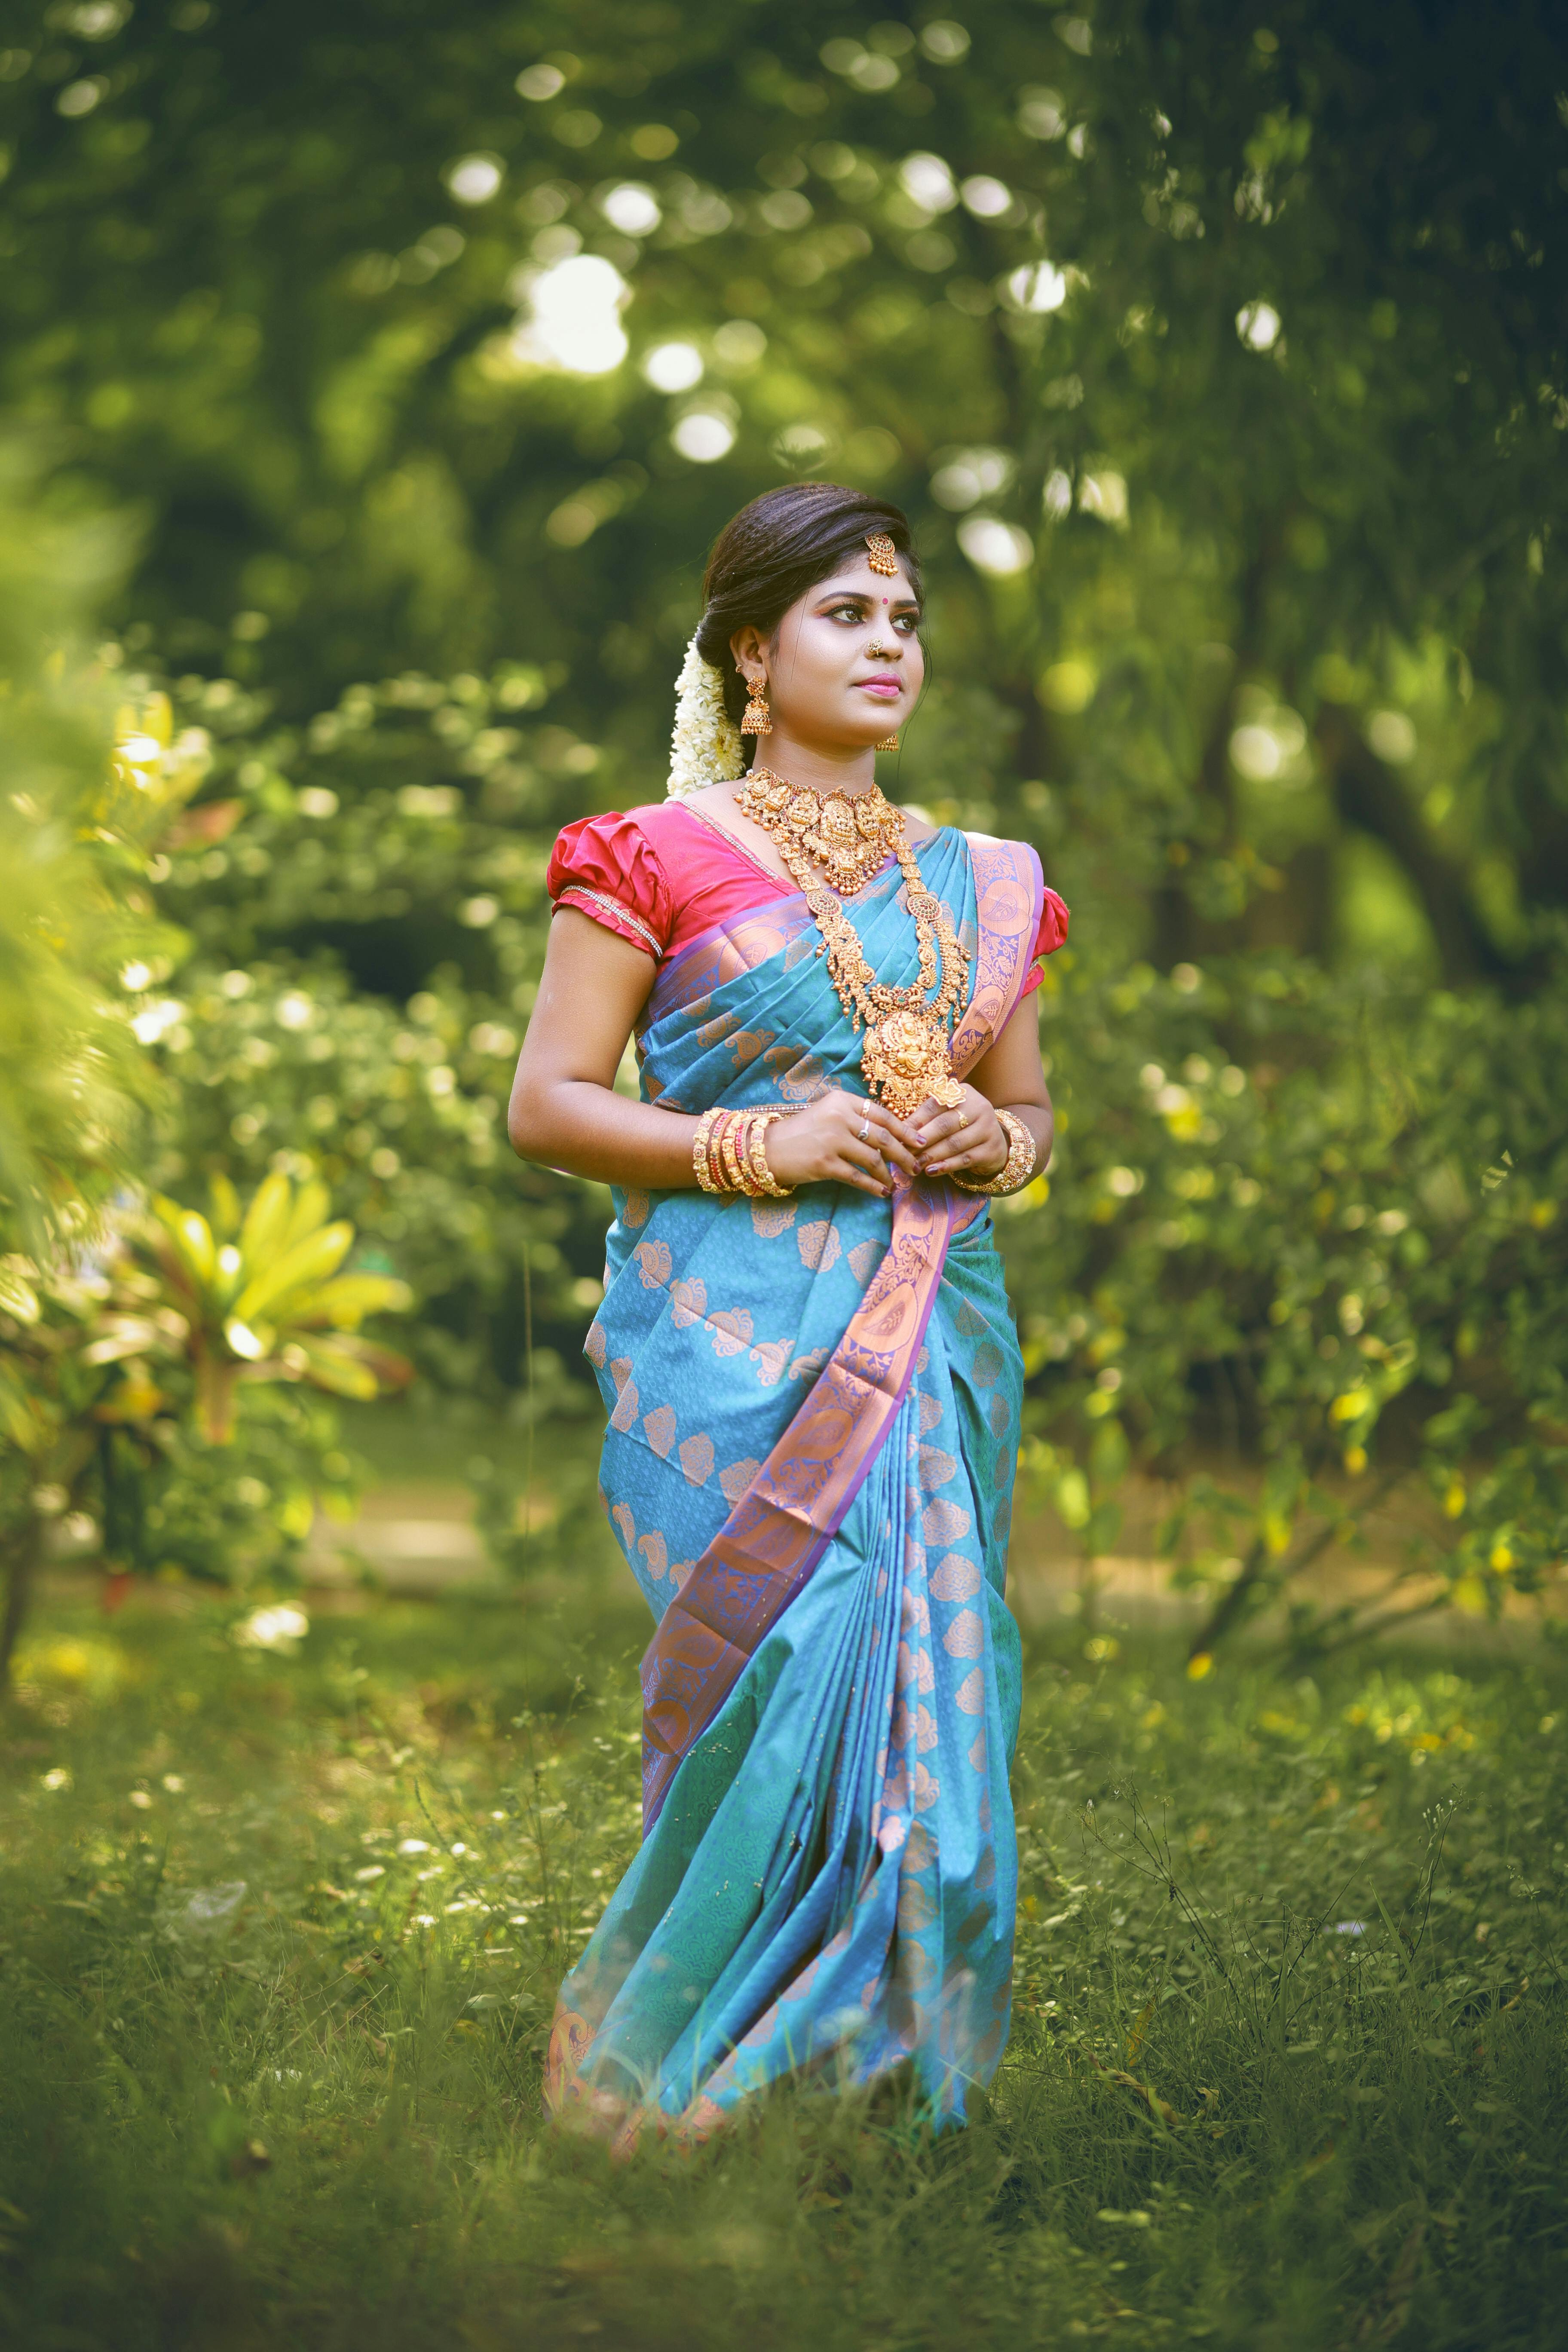 Portrait Indian Woman Saree Wearing Gold Stock Photo 1602222814 |  Shutterstock